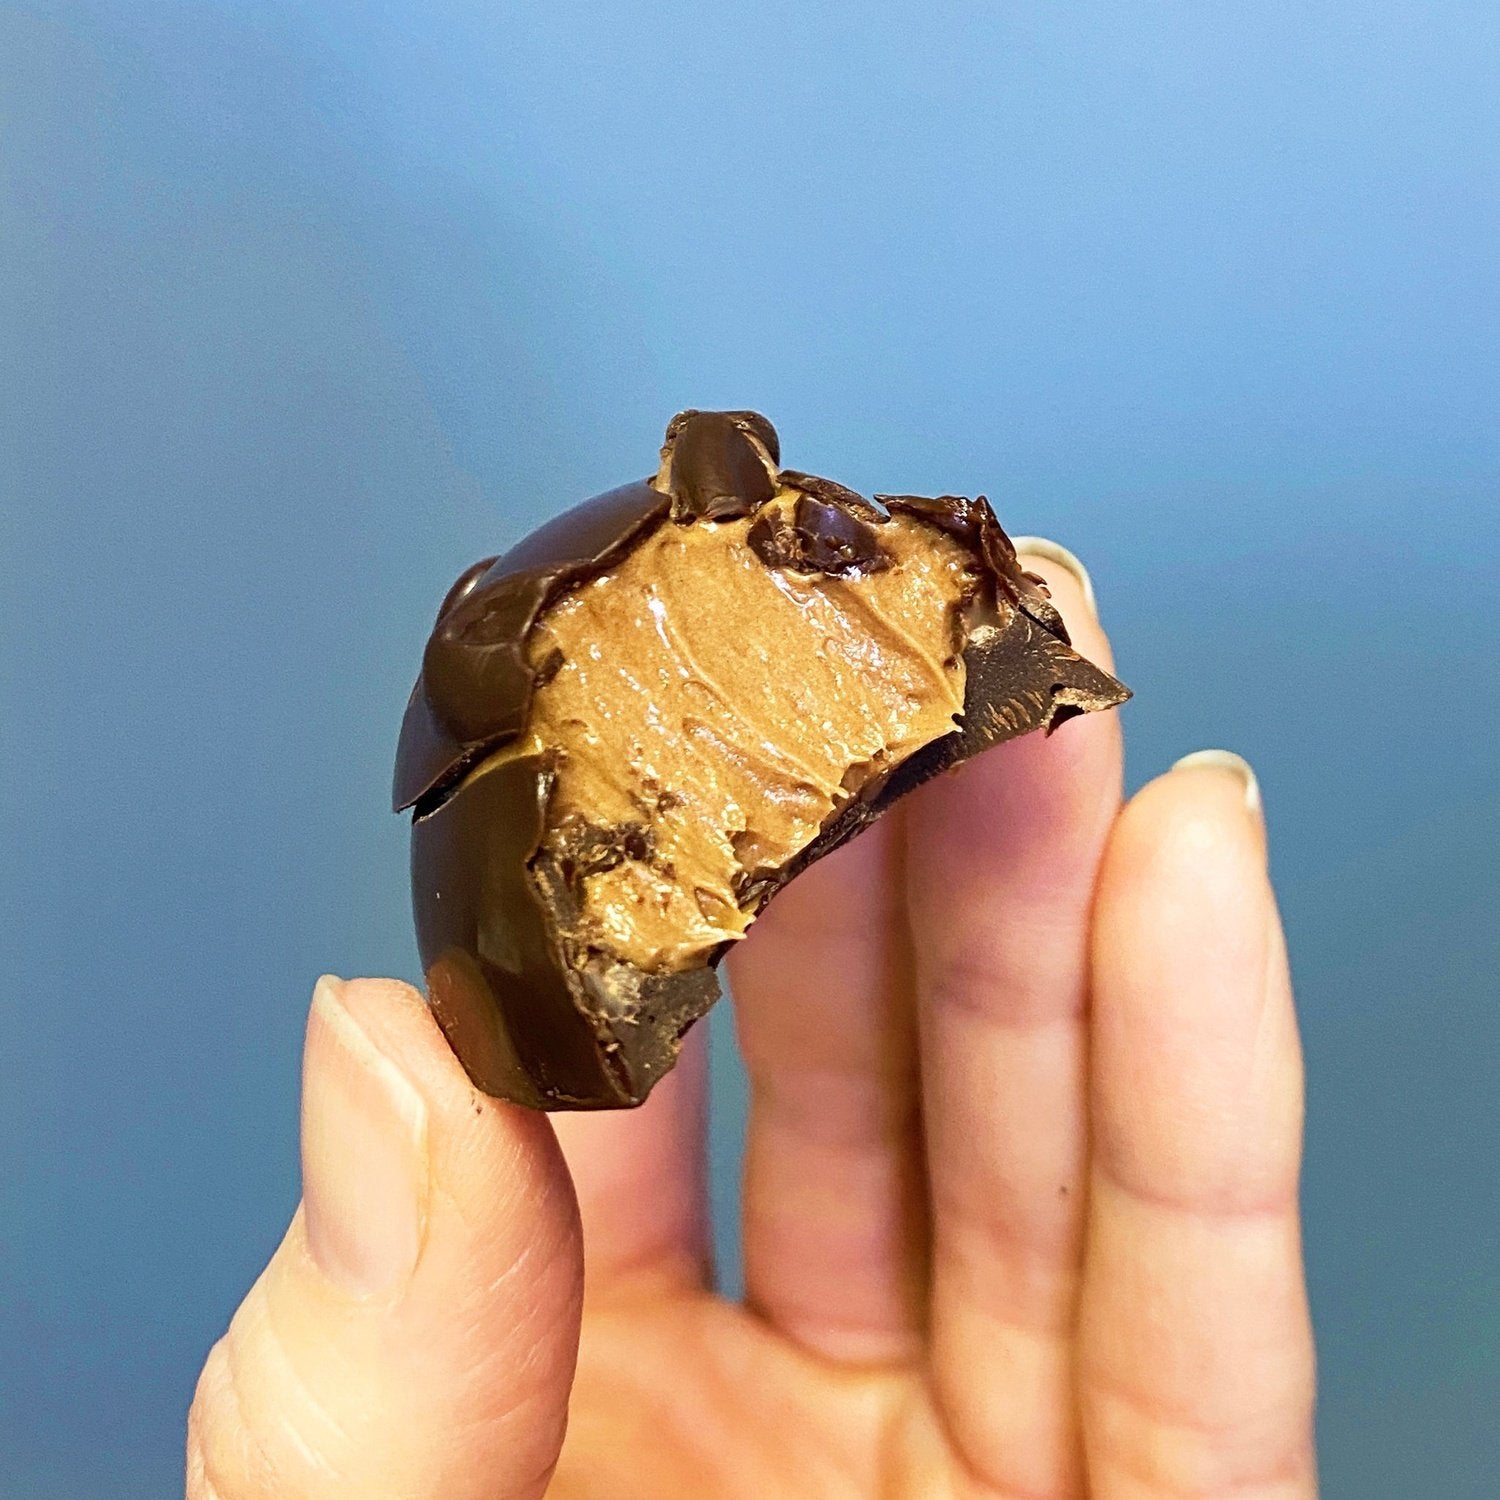 Hummingbird Chocolate Maker - Honey Bunny Bonbons - Bite of bonbon showing the inside filling.